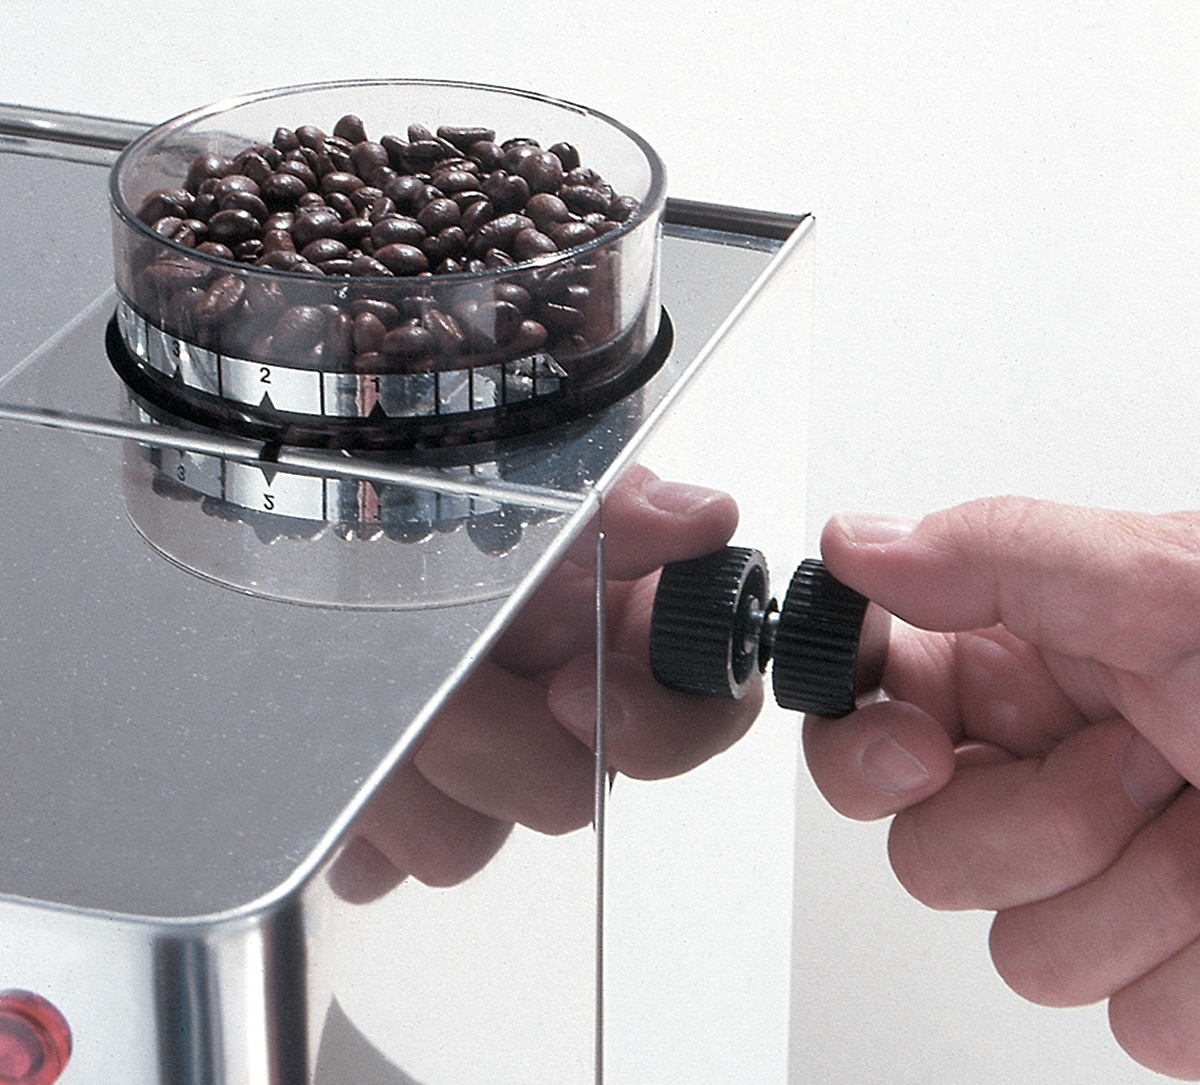 La Pavoni Domus Bar espresso machine